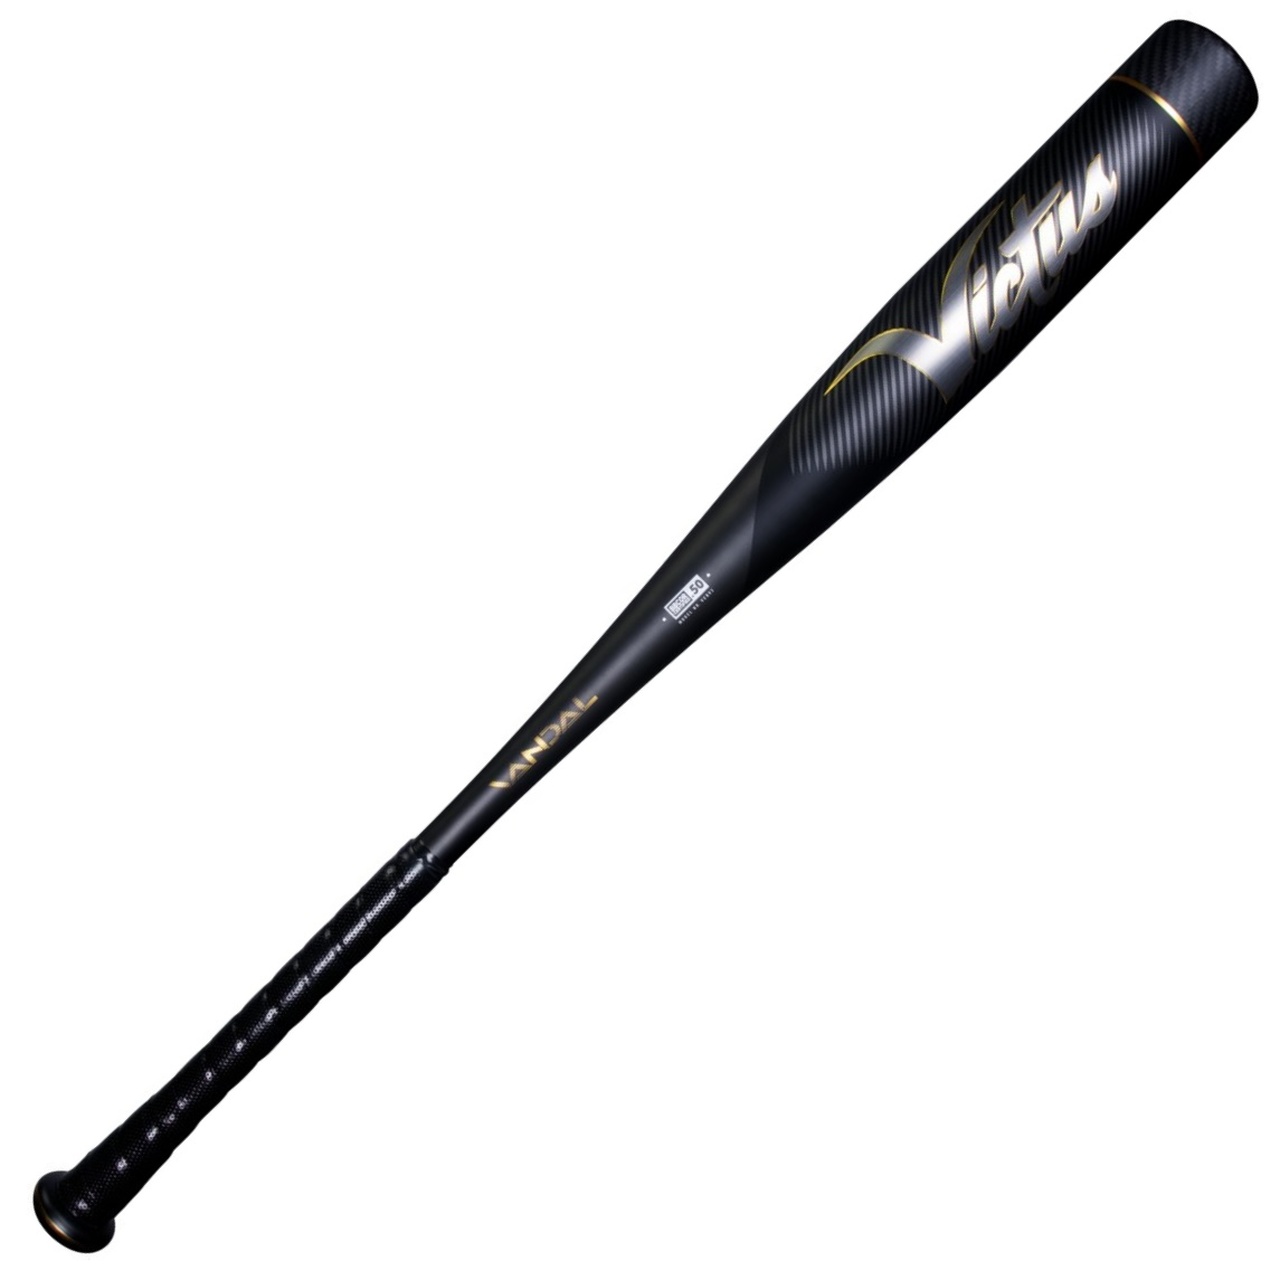 victus-vandal-2-10-baseball-bat-29-inch-19-oz VSBV2X10-2919 Victus            